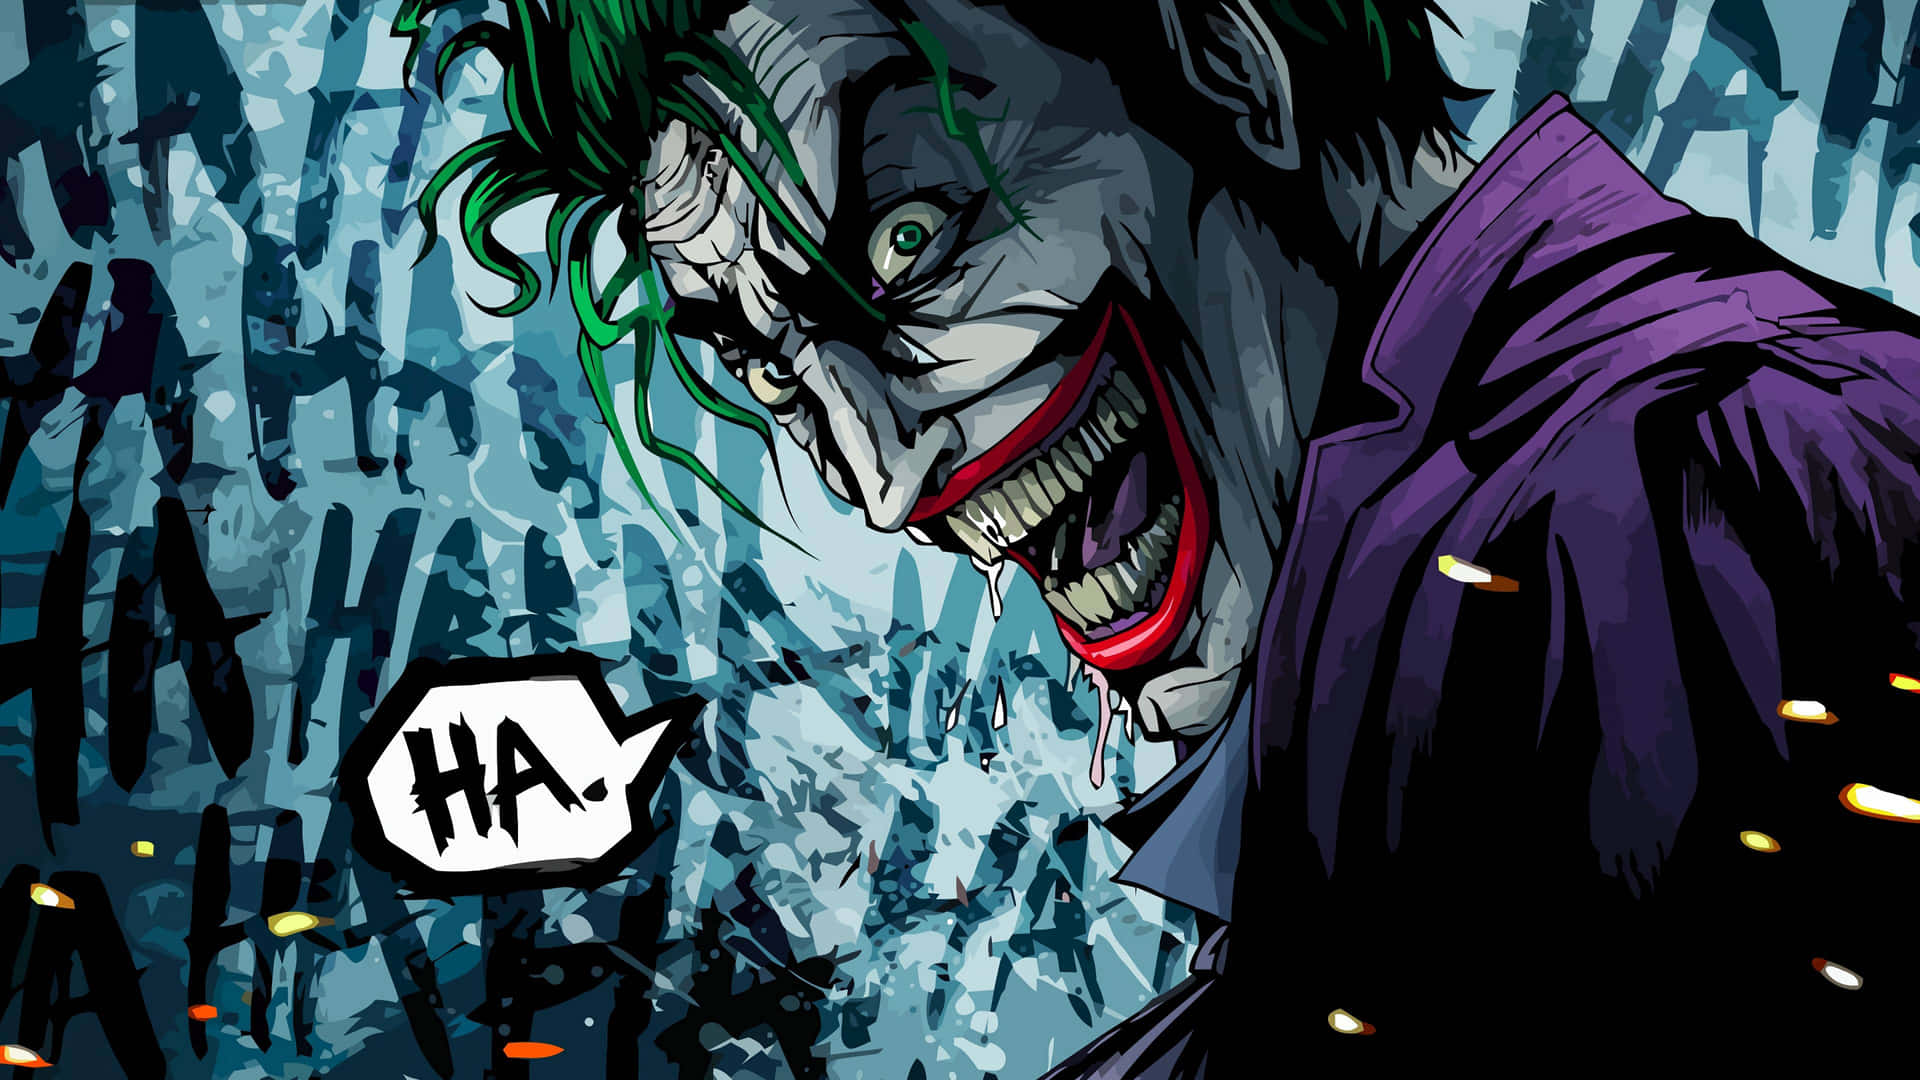 Maniacal Joker Laugh In An Intense Atmosphere